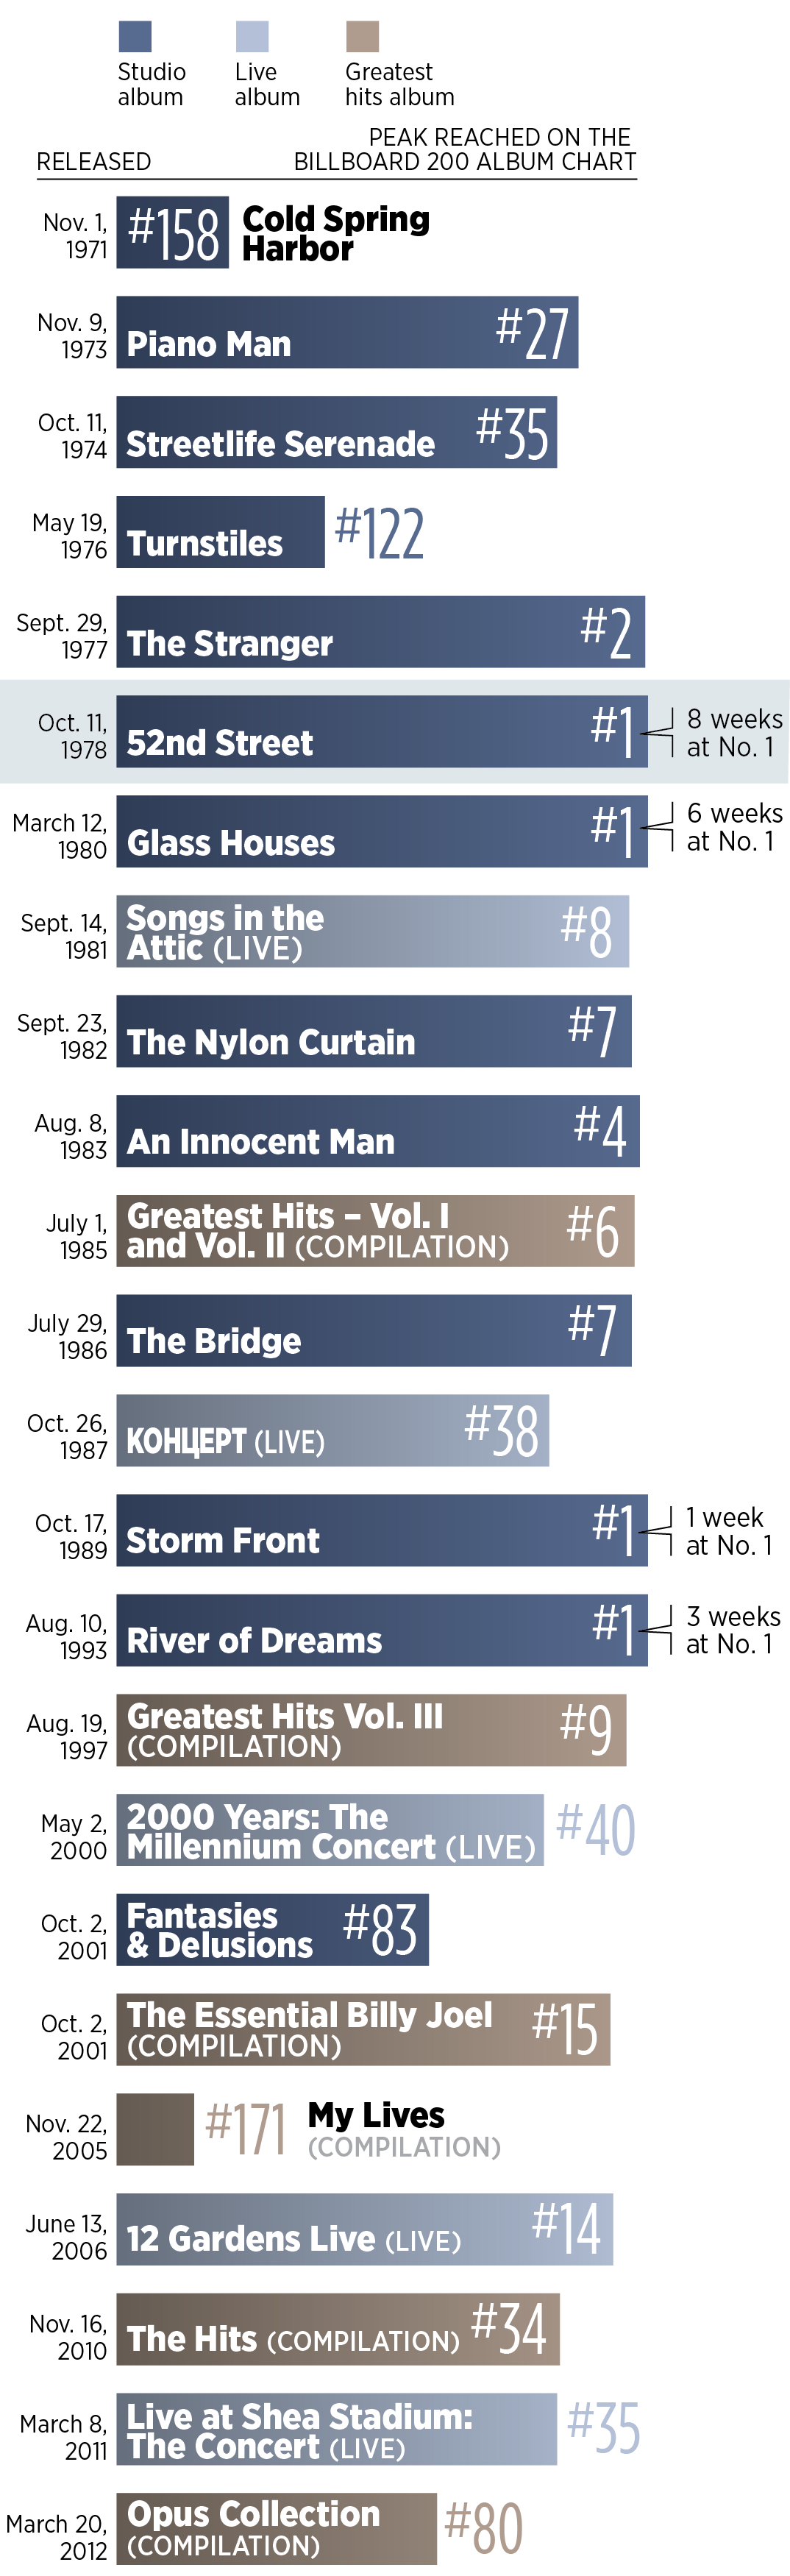 Billy Joel's album charting